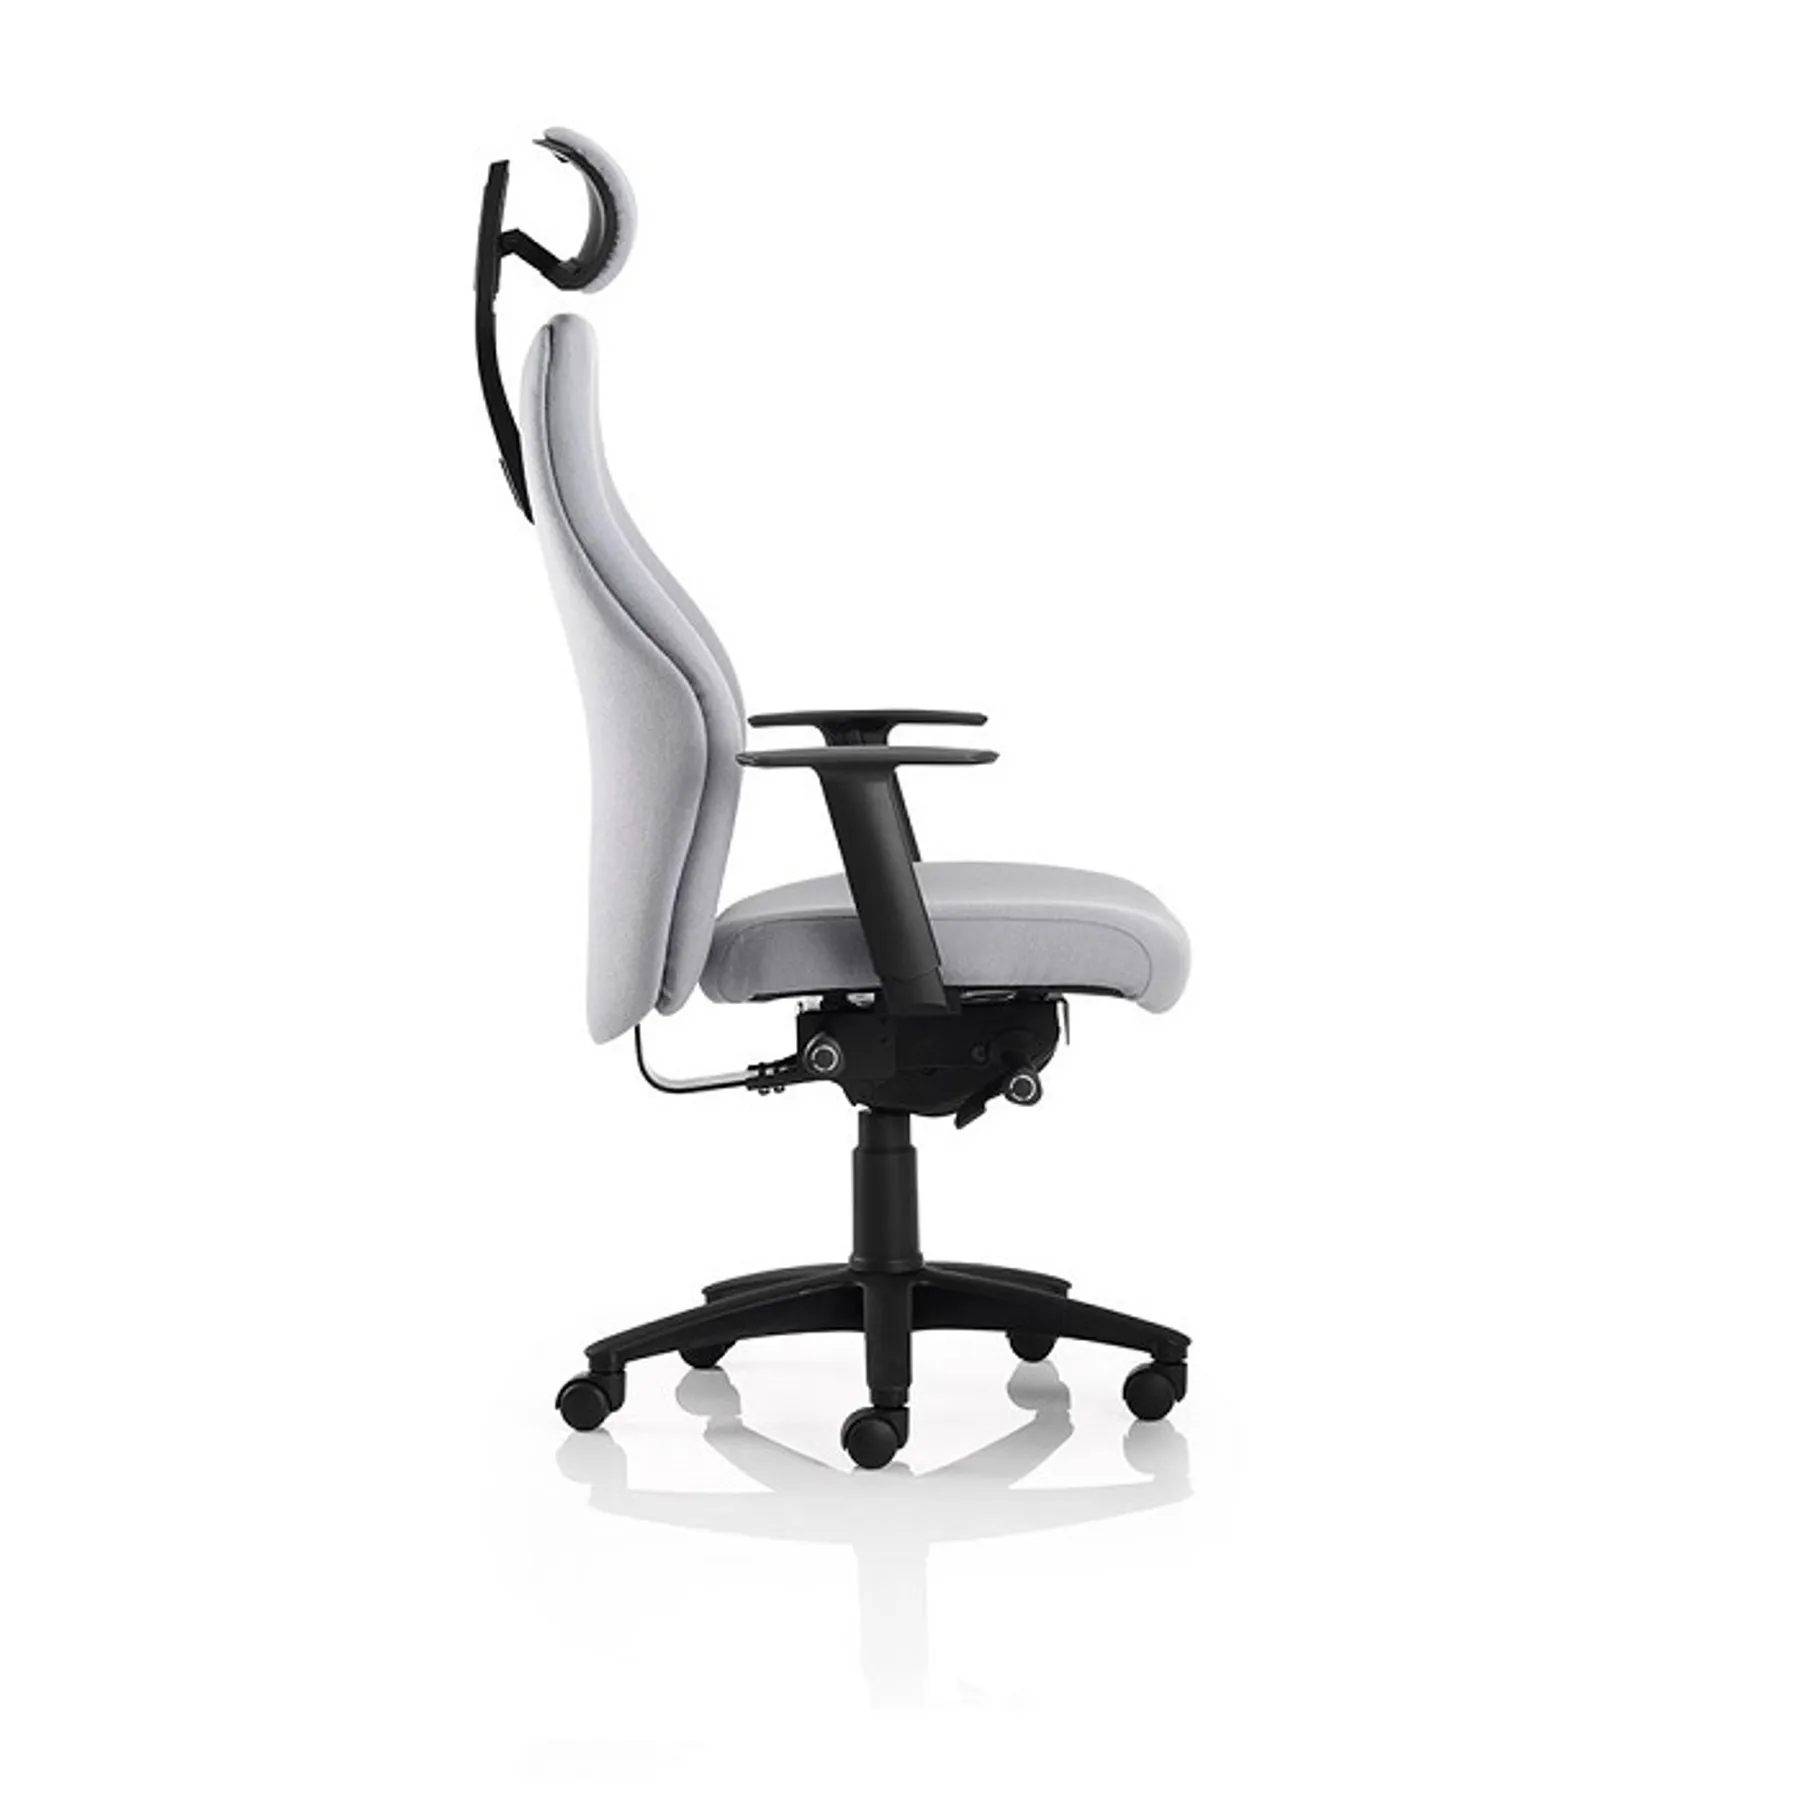 Lof direct flexion high back task chair band 1 fabric 3 14 p jpgresize